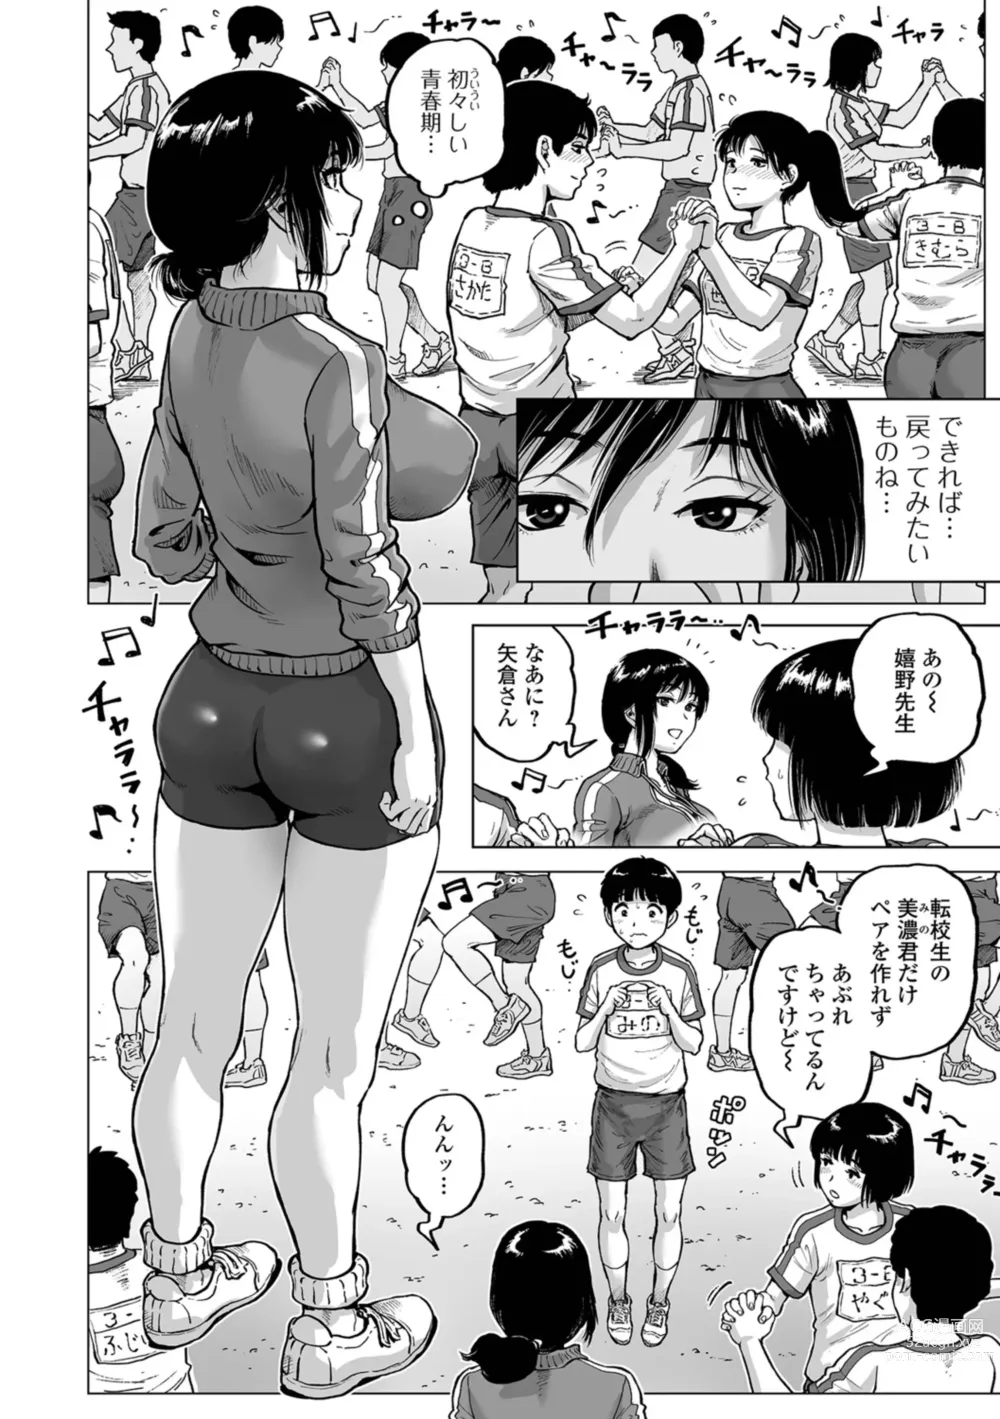 Page 4 of manga Harenchi Classmate